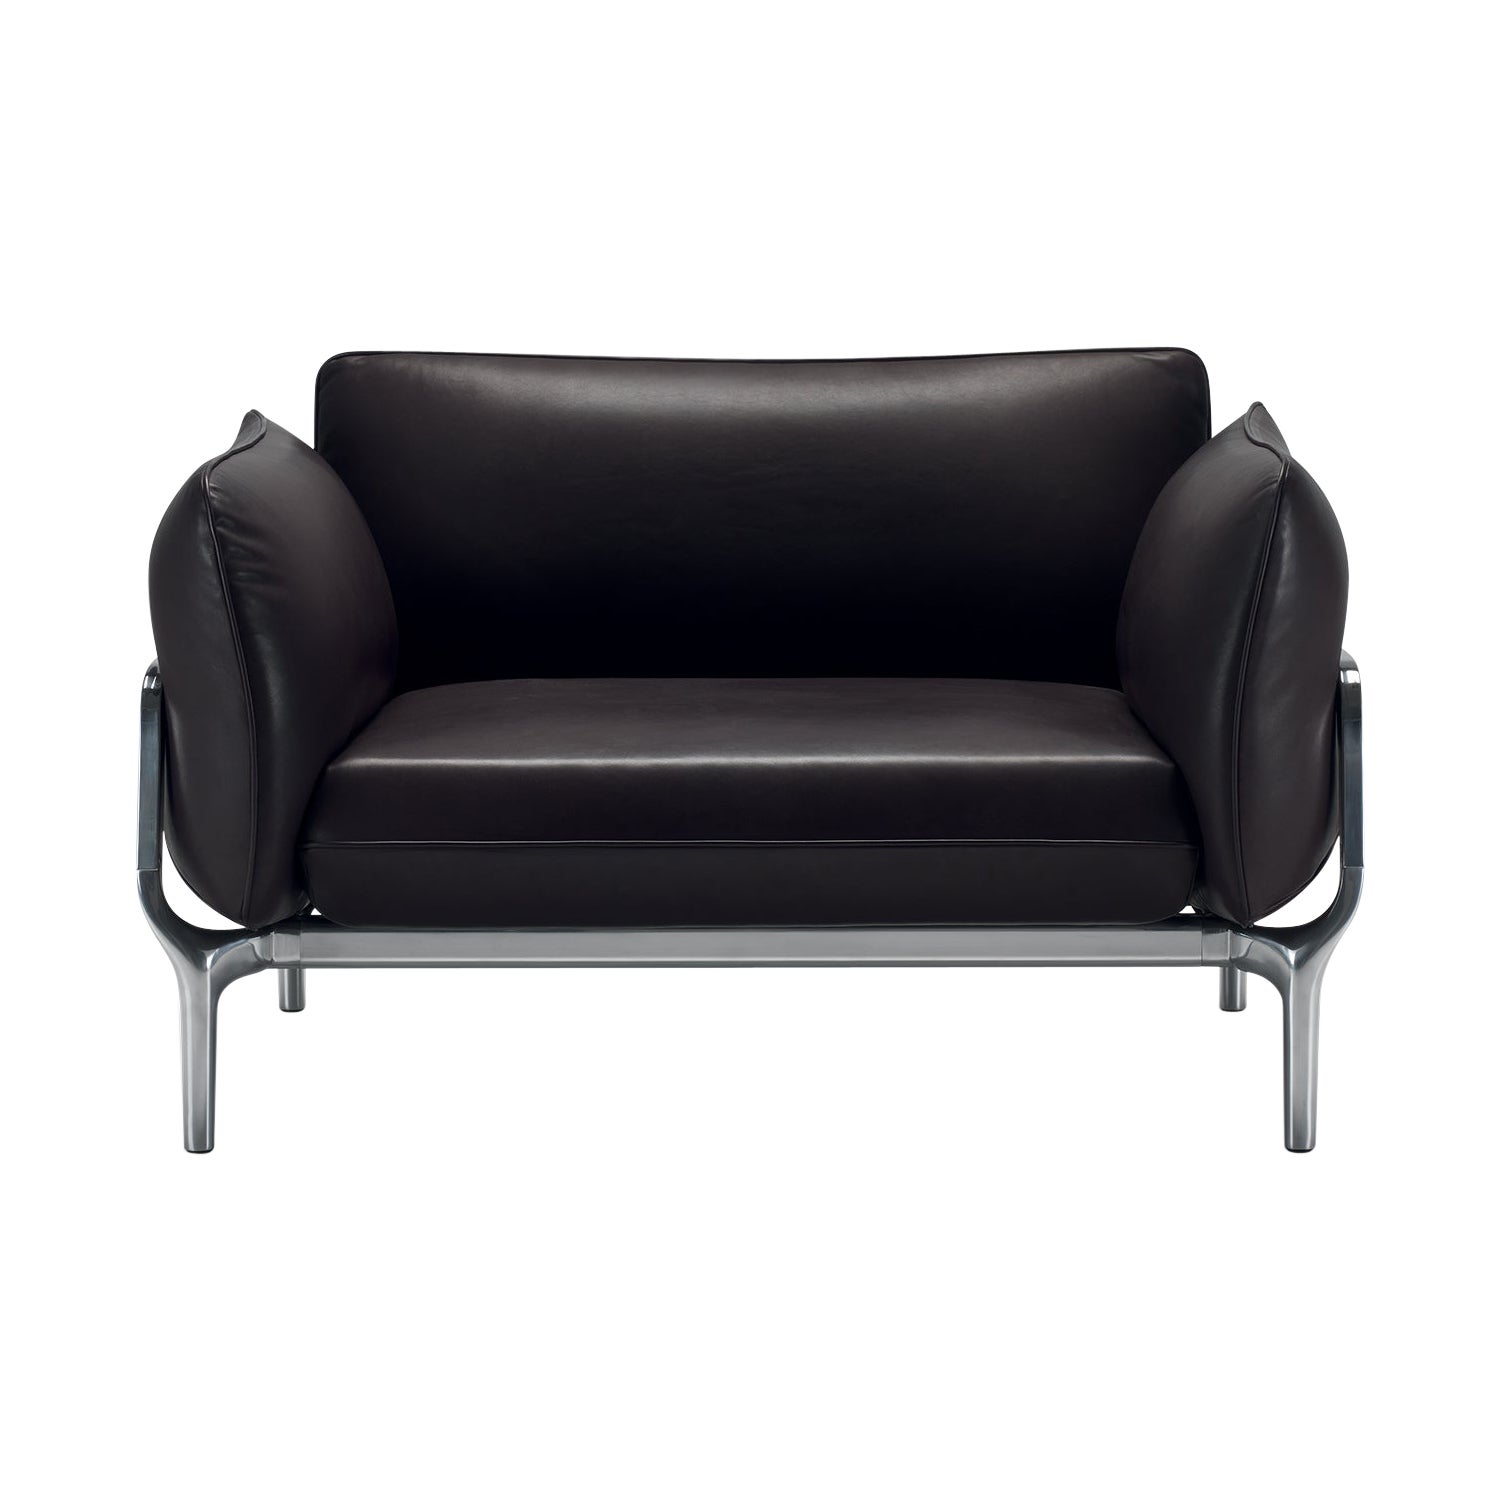 Fauteuil Vina Alias V01 avec assise en cuir torsad et cadre en aluminium poli en vente